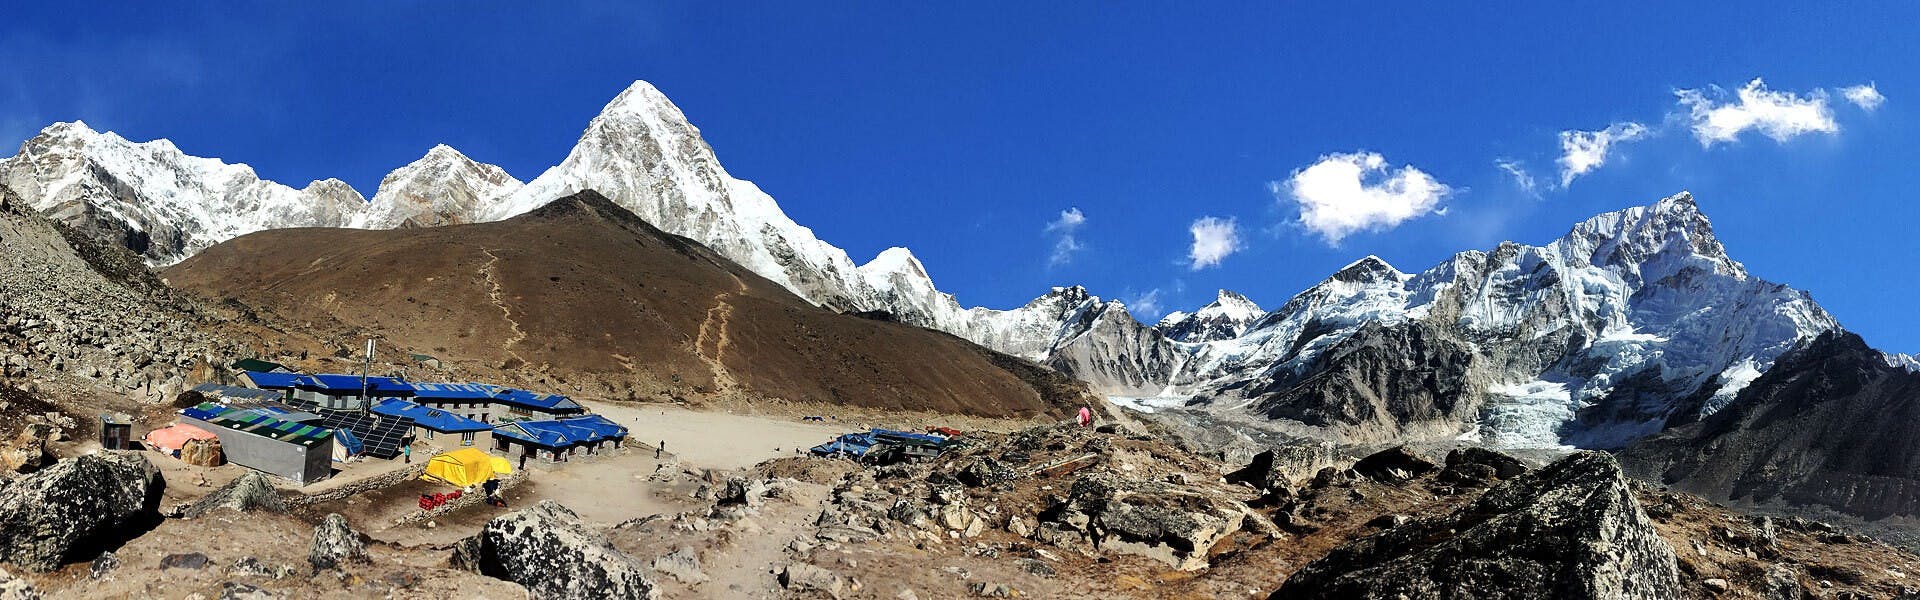 10 Tips for Successful Trek to Everest Region